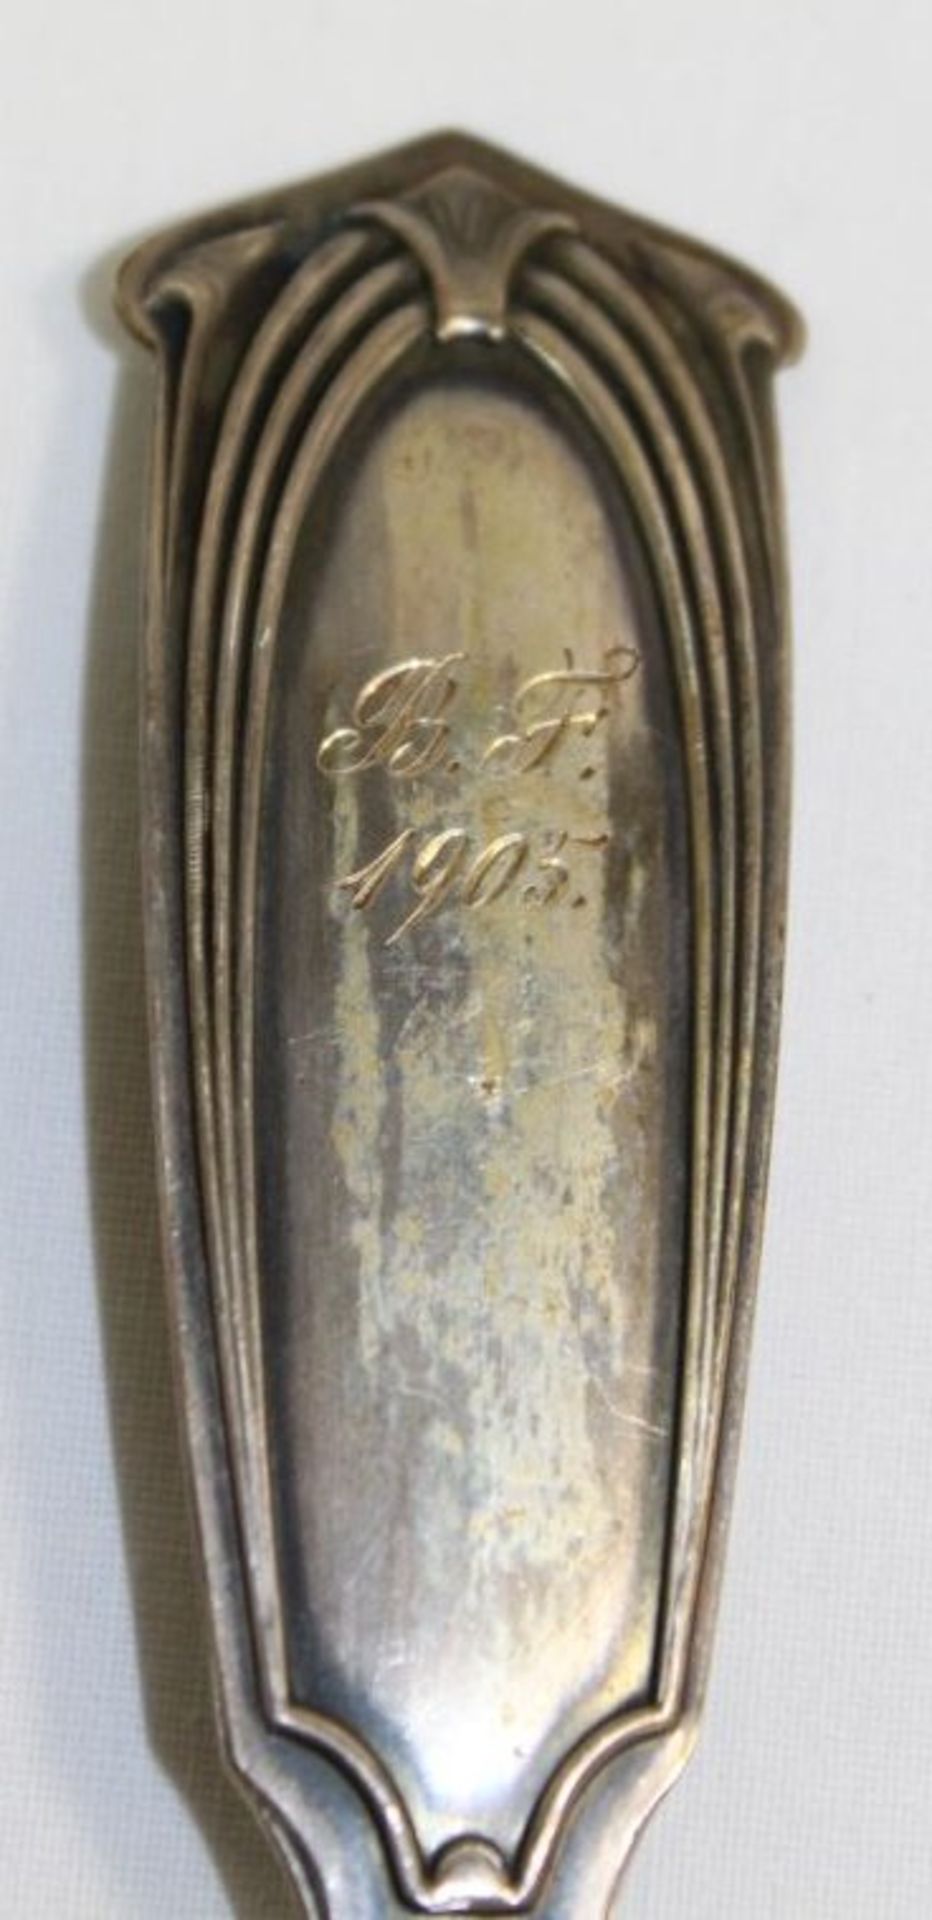 800er Silber-Esslöffel, Jugendstil, div. Gravuren "Margot" verso "B.F.1905", 64,2gr., L-21cm. - Bild 3 aus 3